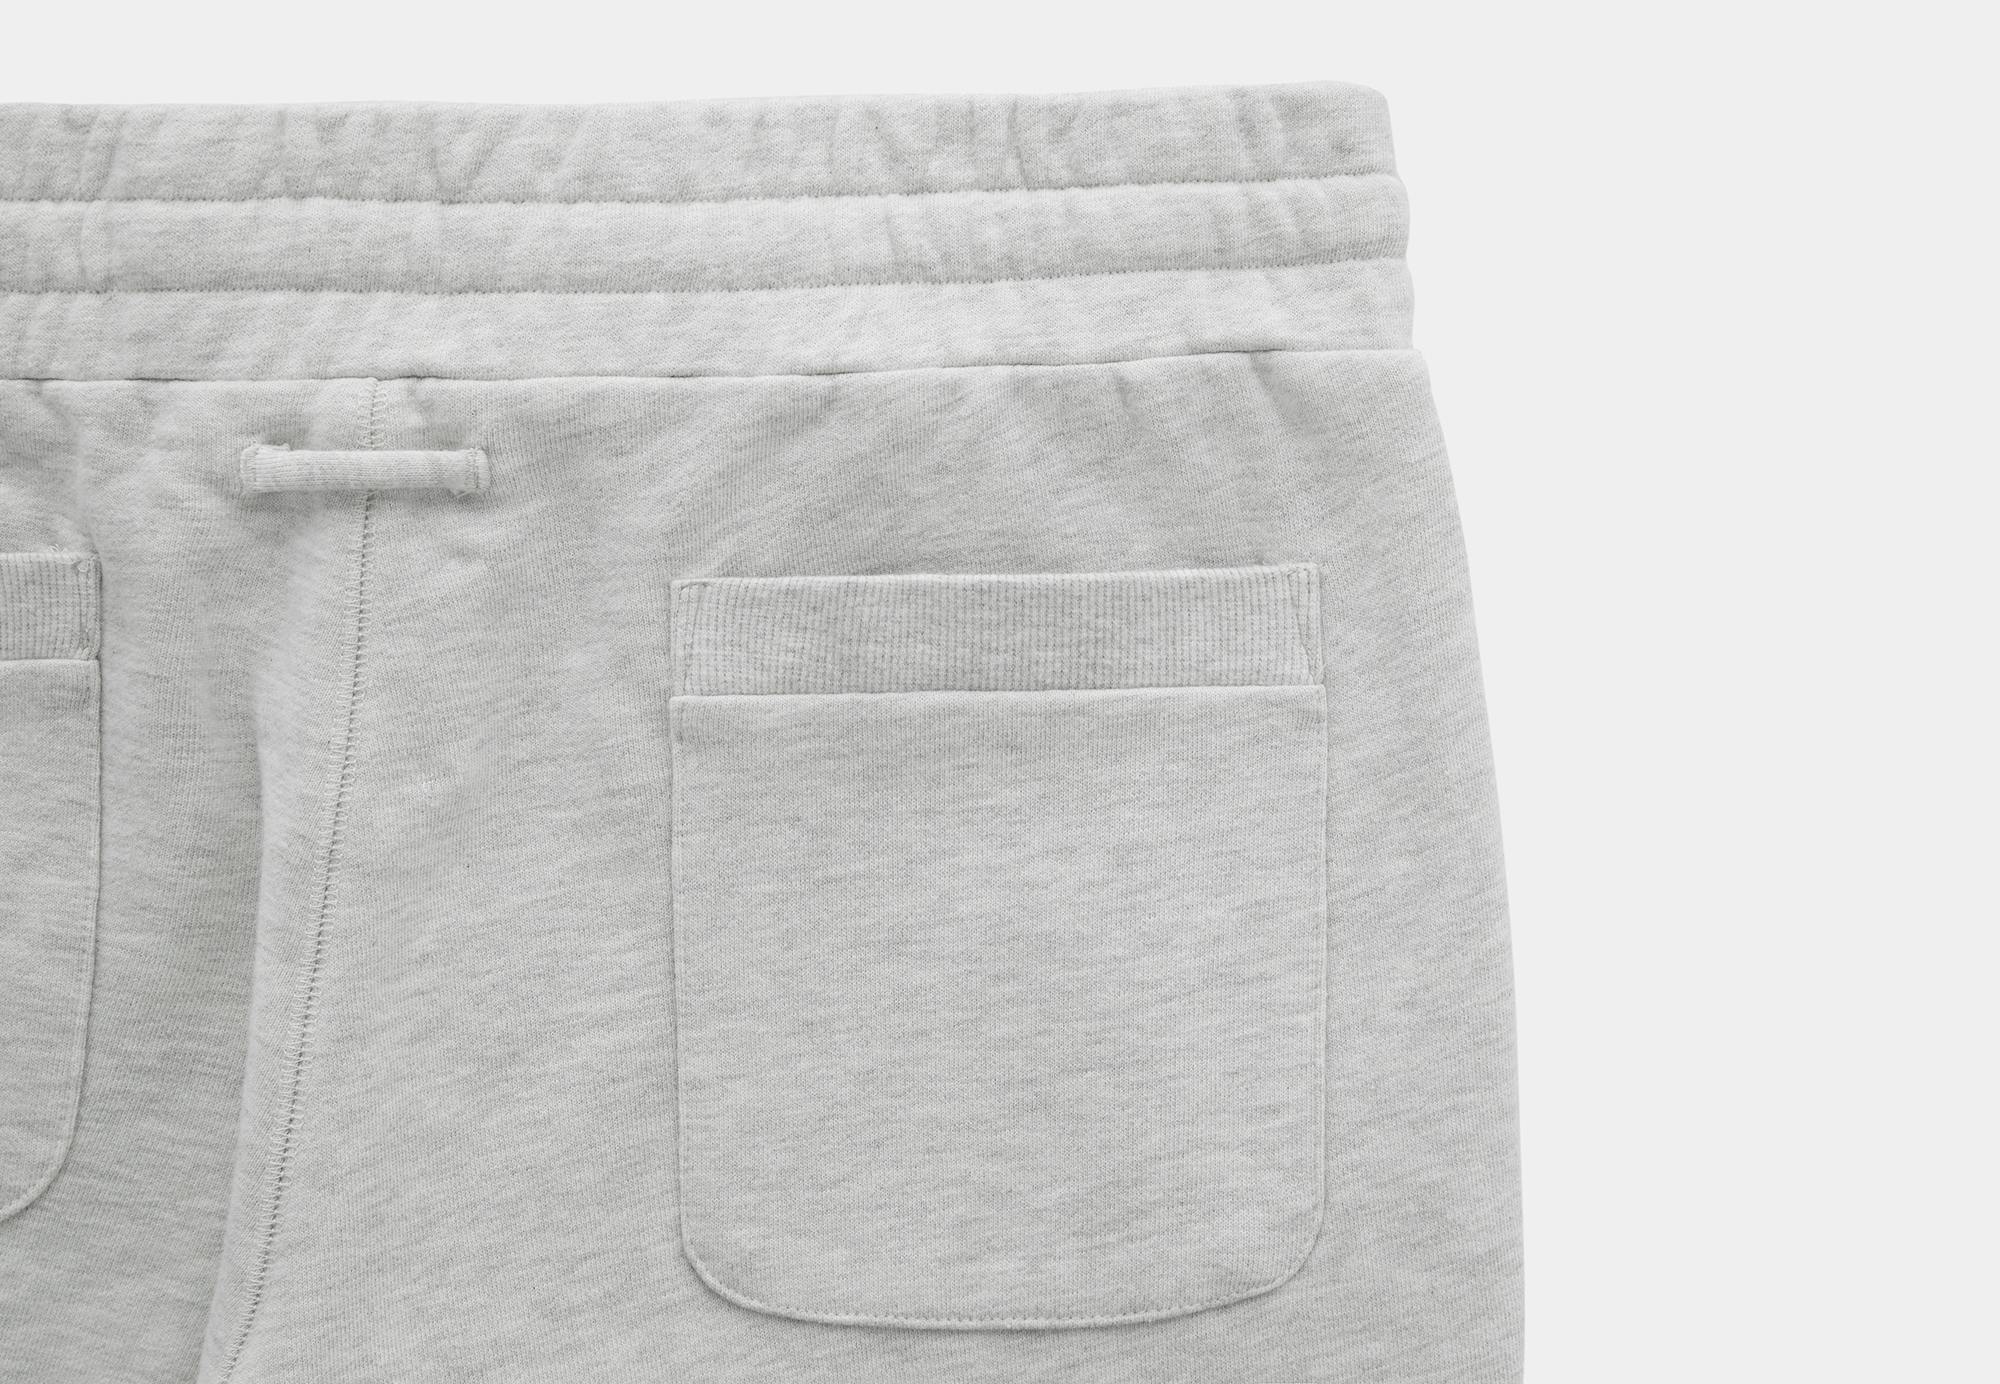 PDP Image: Lounge Sweatpants (M's Fit - Grey) - 3:2 - Back Pocket